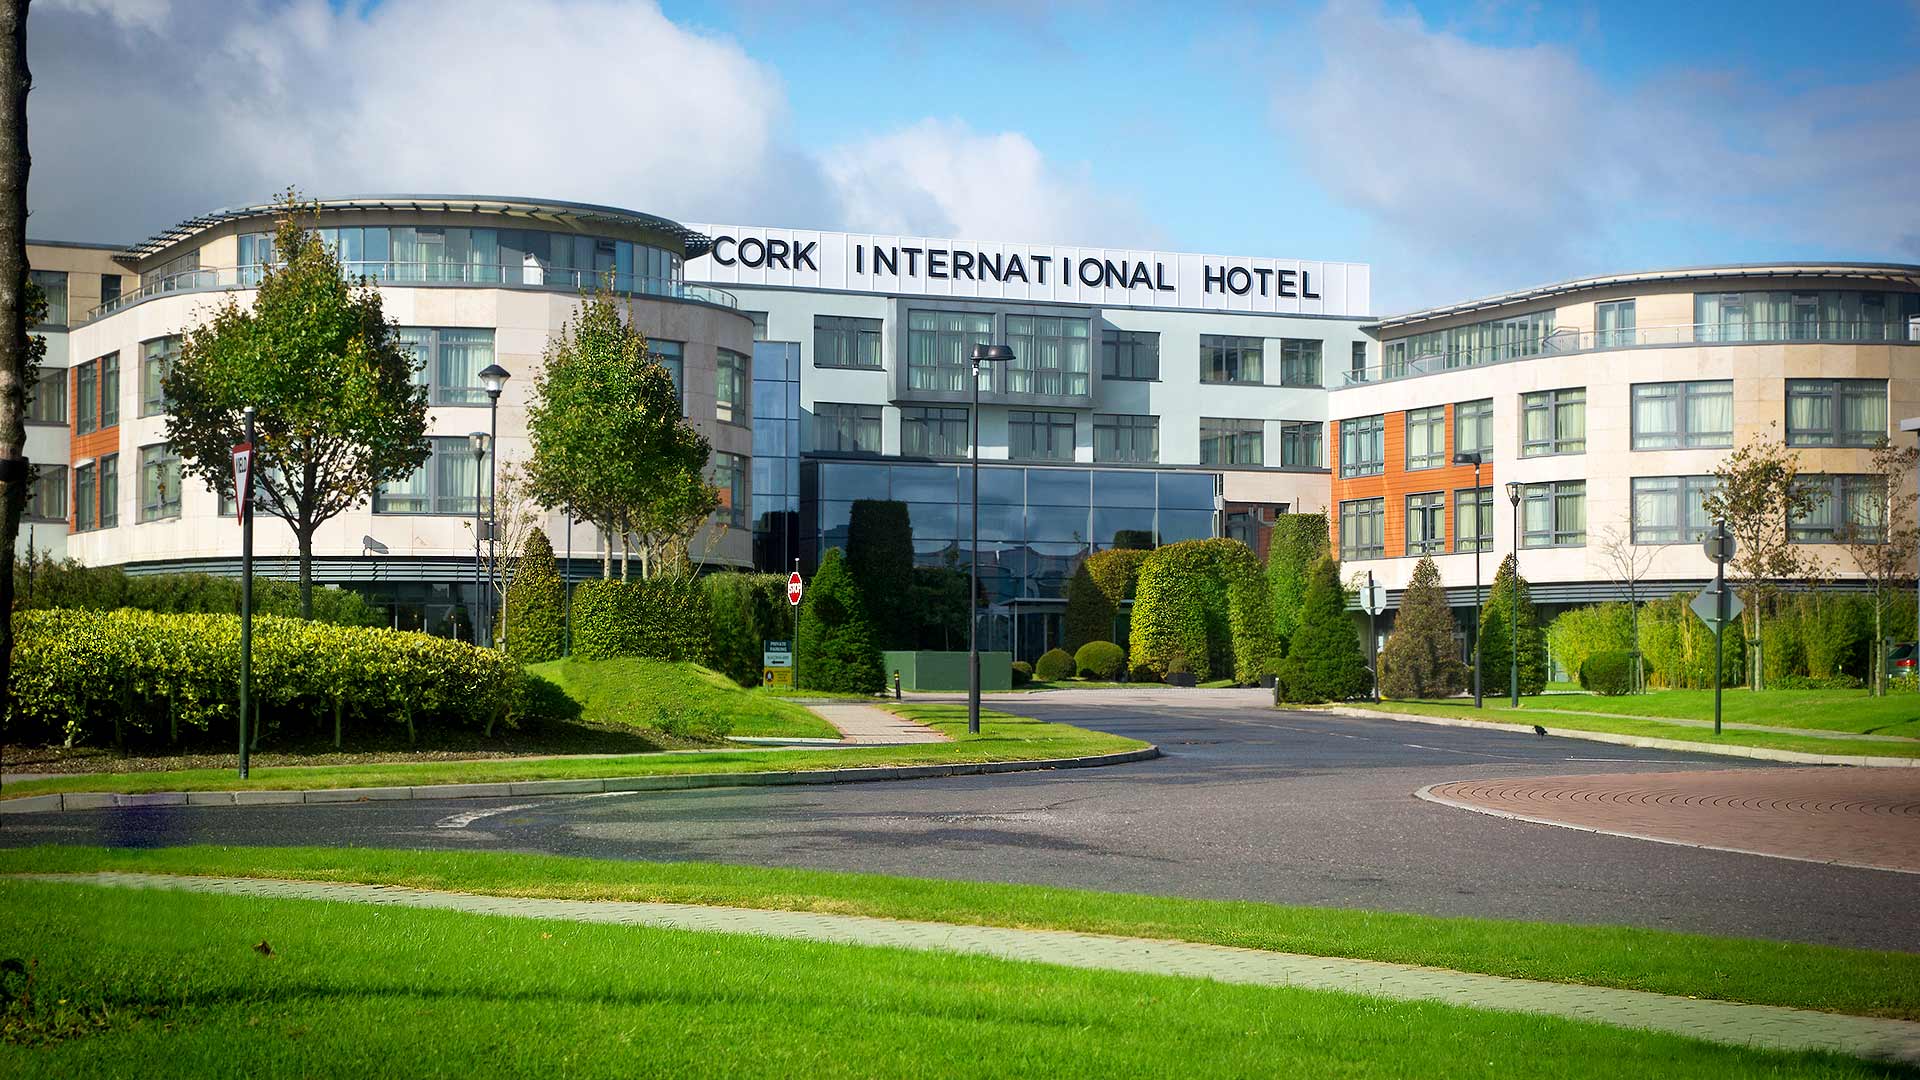 Cork International Hotel exterior